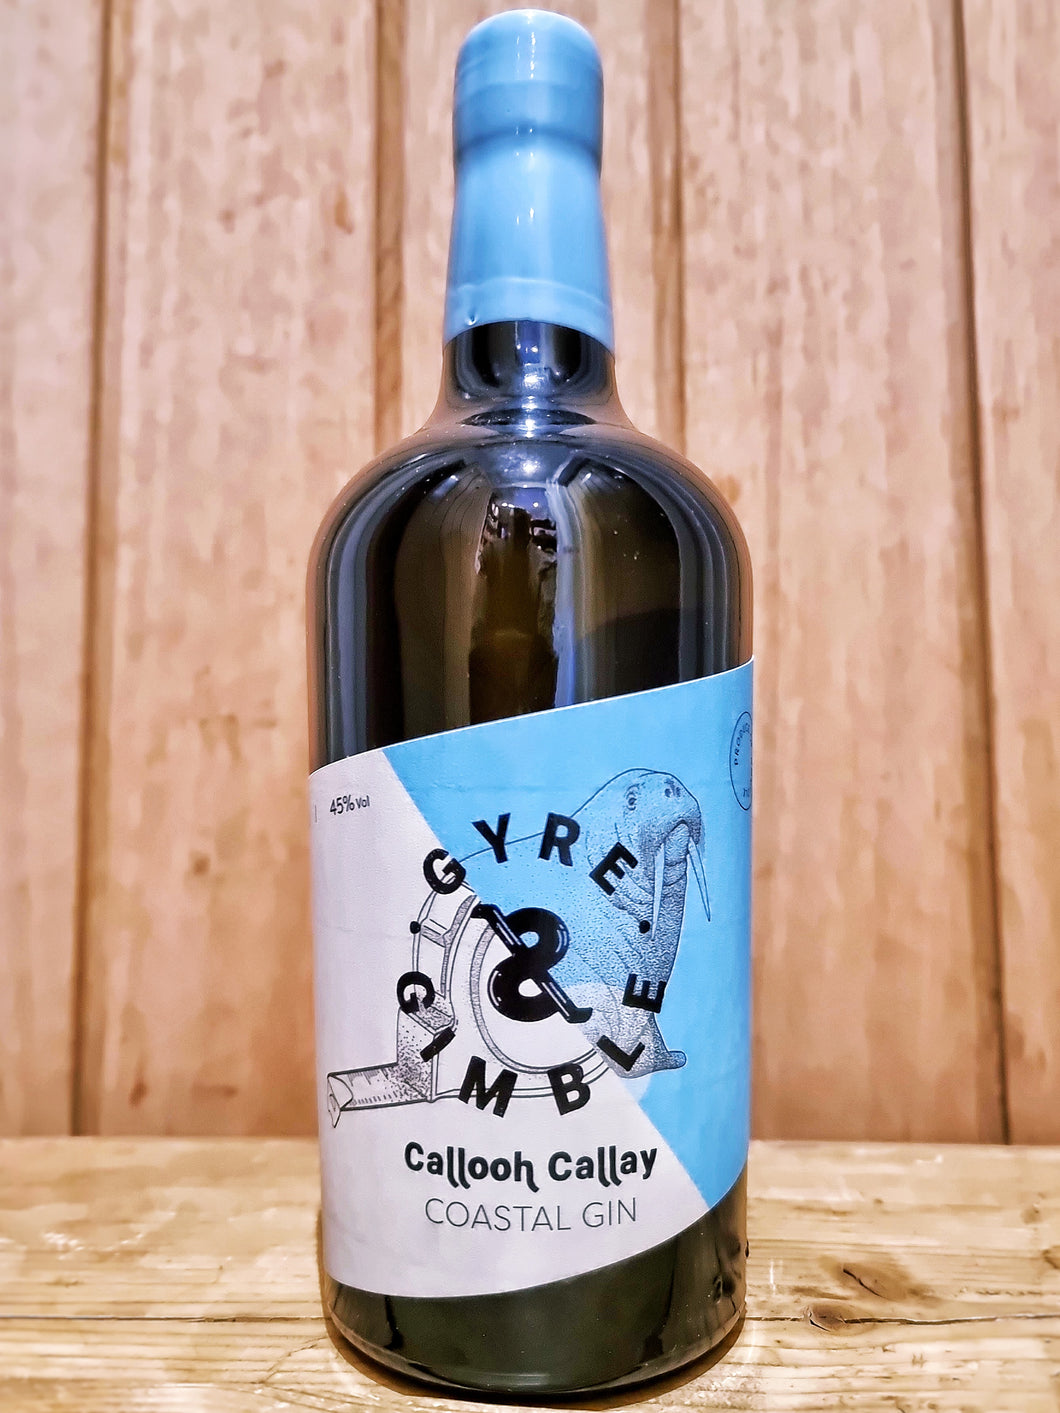 Gyre and Gimble - Callooh Callay Coastal Gin